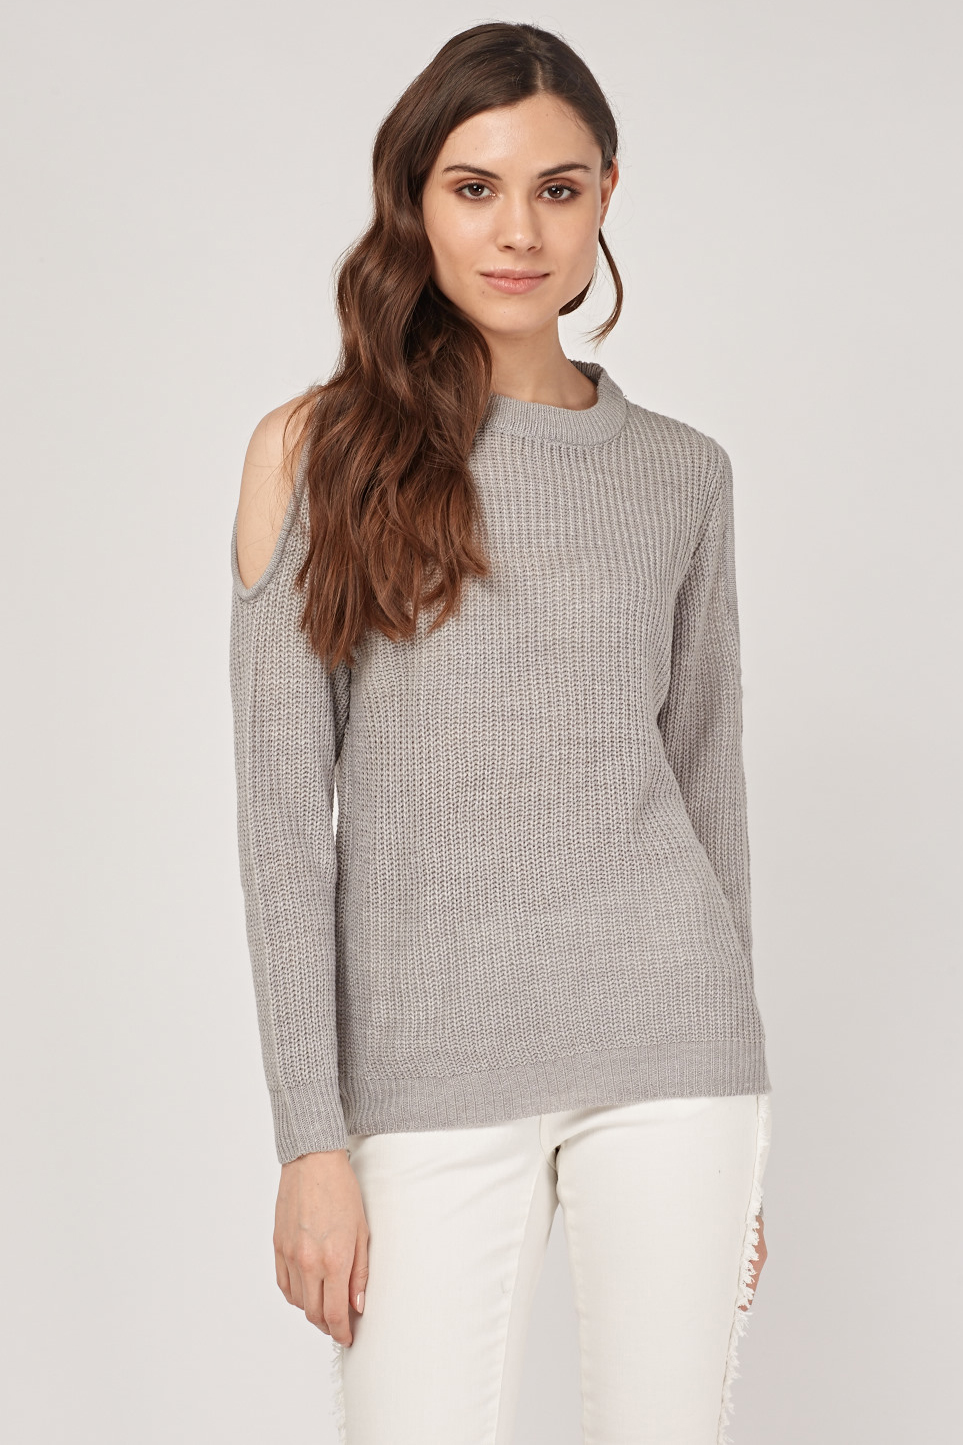 Cold Shoulder Herringbone Knit Sweater - Just $7